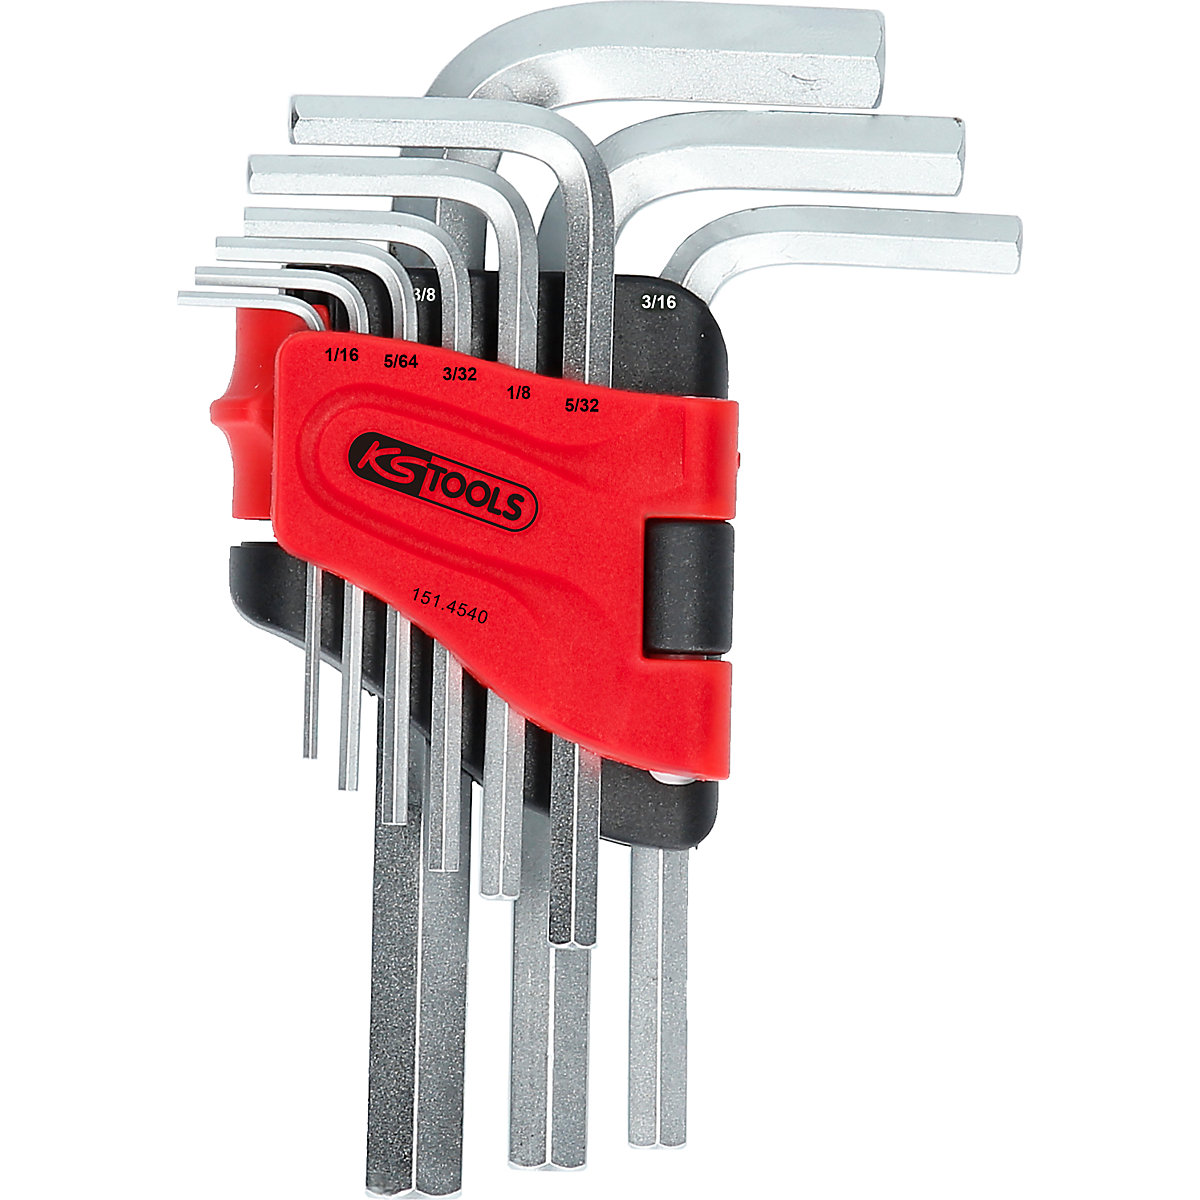 Sada zástrčných klíčů ve skládacím držáku – KS Tools